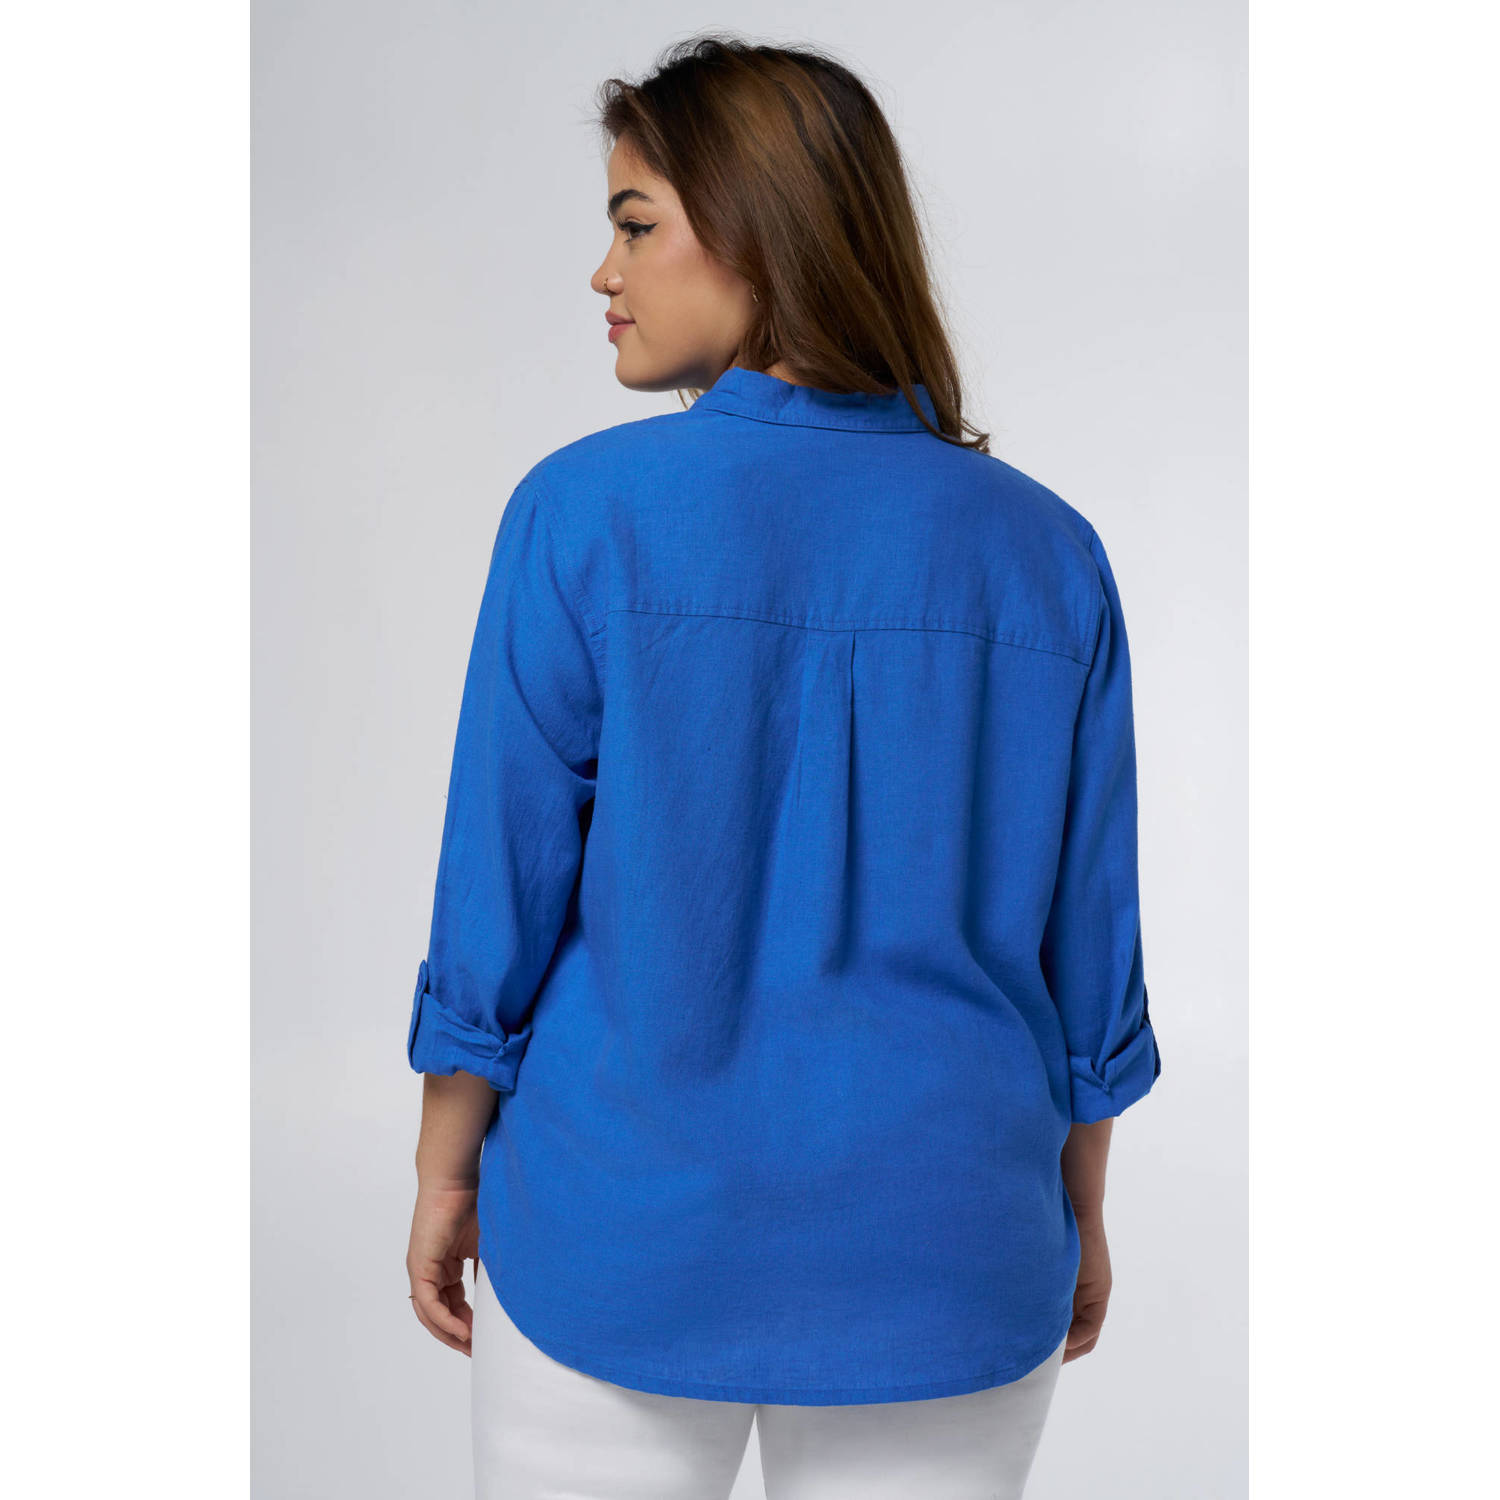 MS Mode blouse blauw